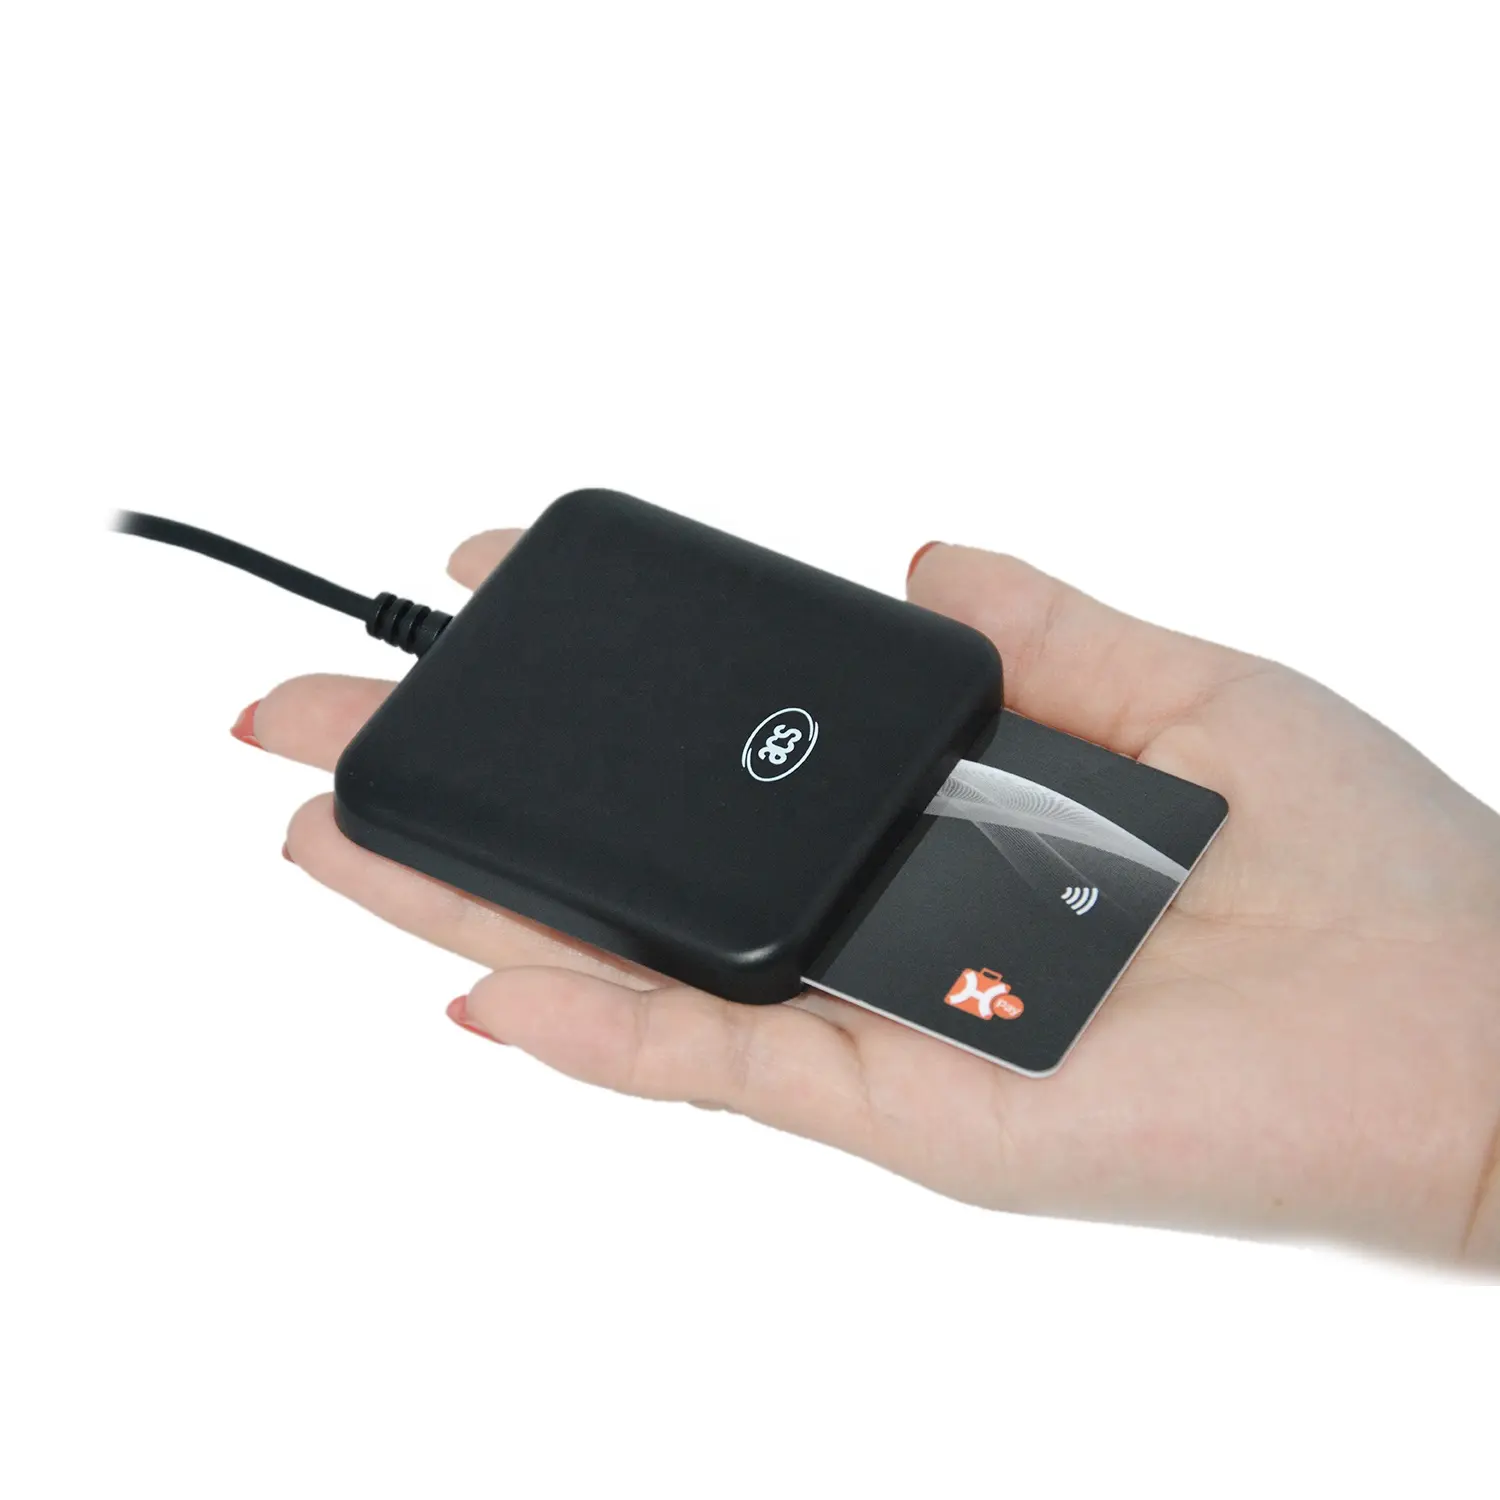 Cheap Price Portable USB Small EMV Contact IC Chip Card Reader Writer ACR39U-U1